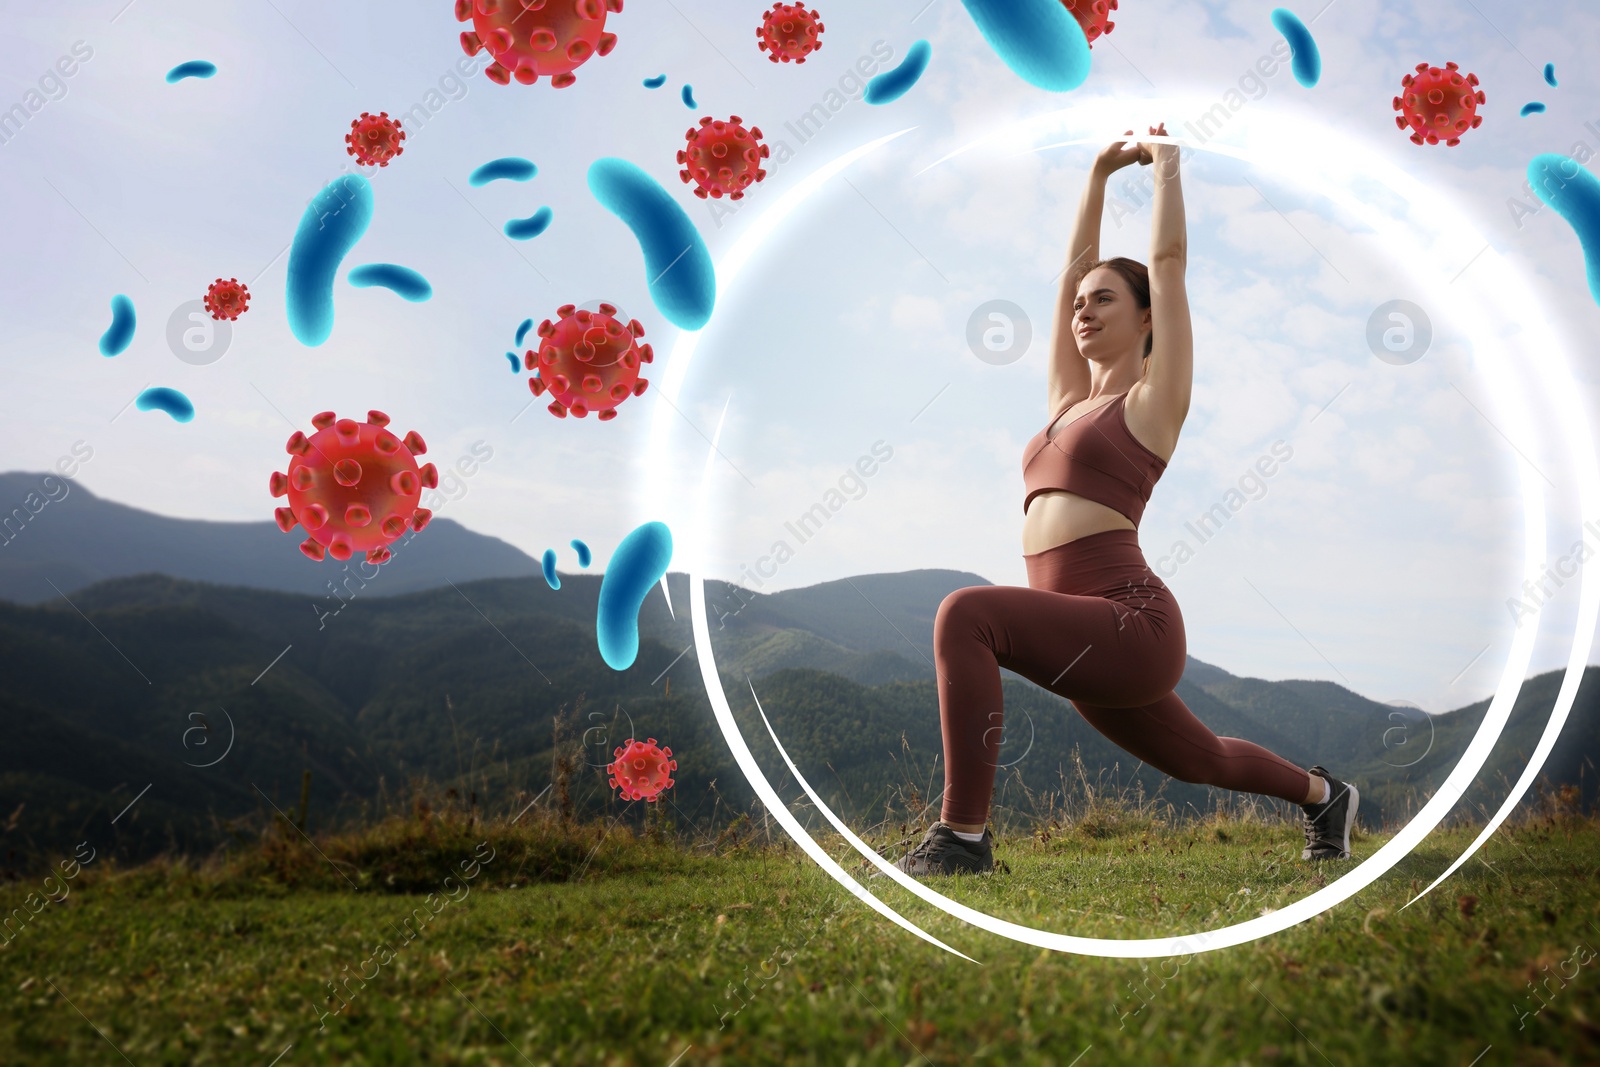 Image of Happy woman practicing yoga in mountains. Bubble around her symbolizing strong immunity blocking viruses, illustration